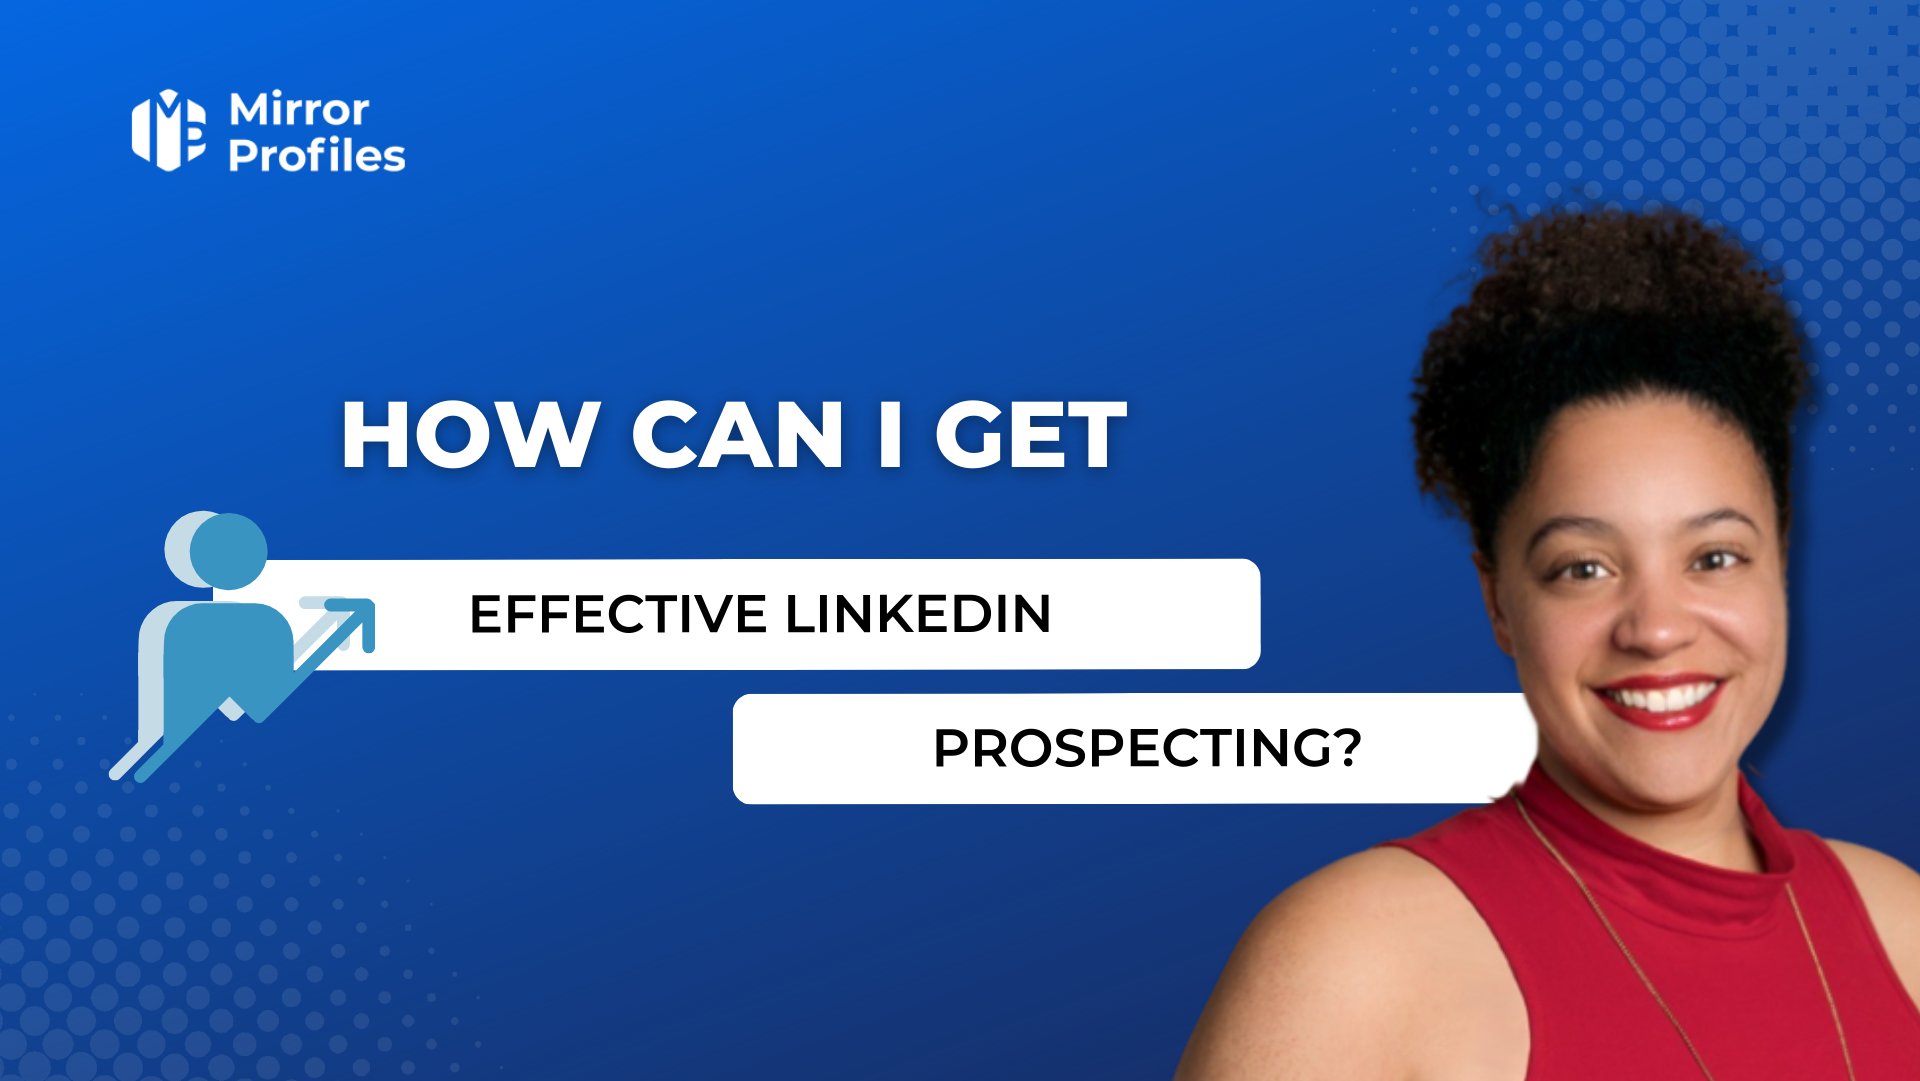 How can I get effective LinkedIn prospecting?